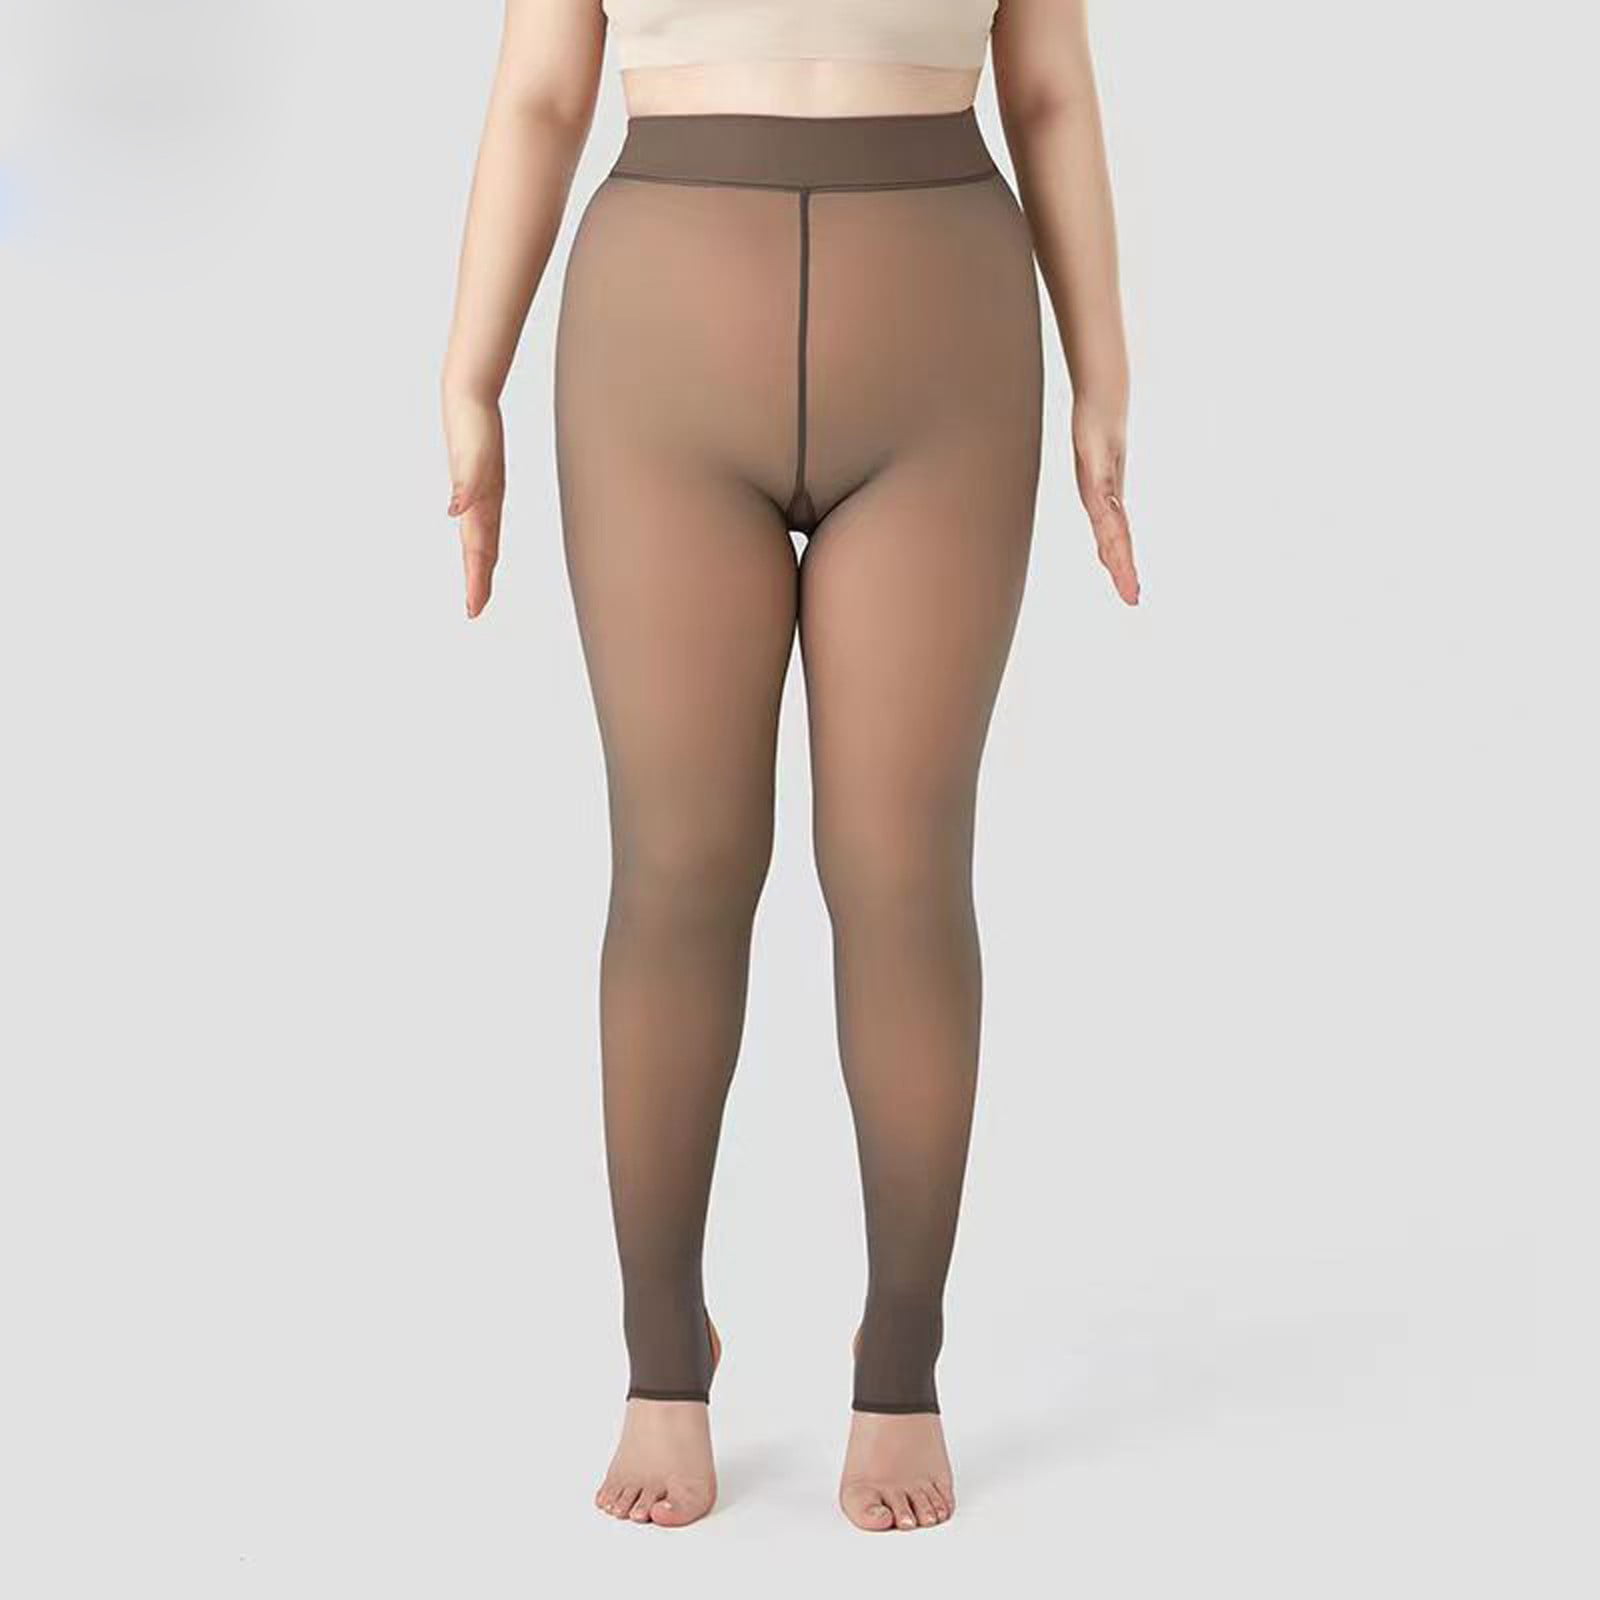 HSMQHJWE Nylons For Women Plus Size Indestructible Pantyhose Women